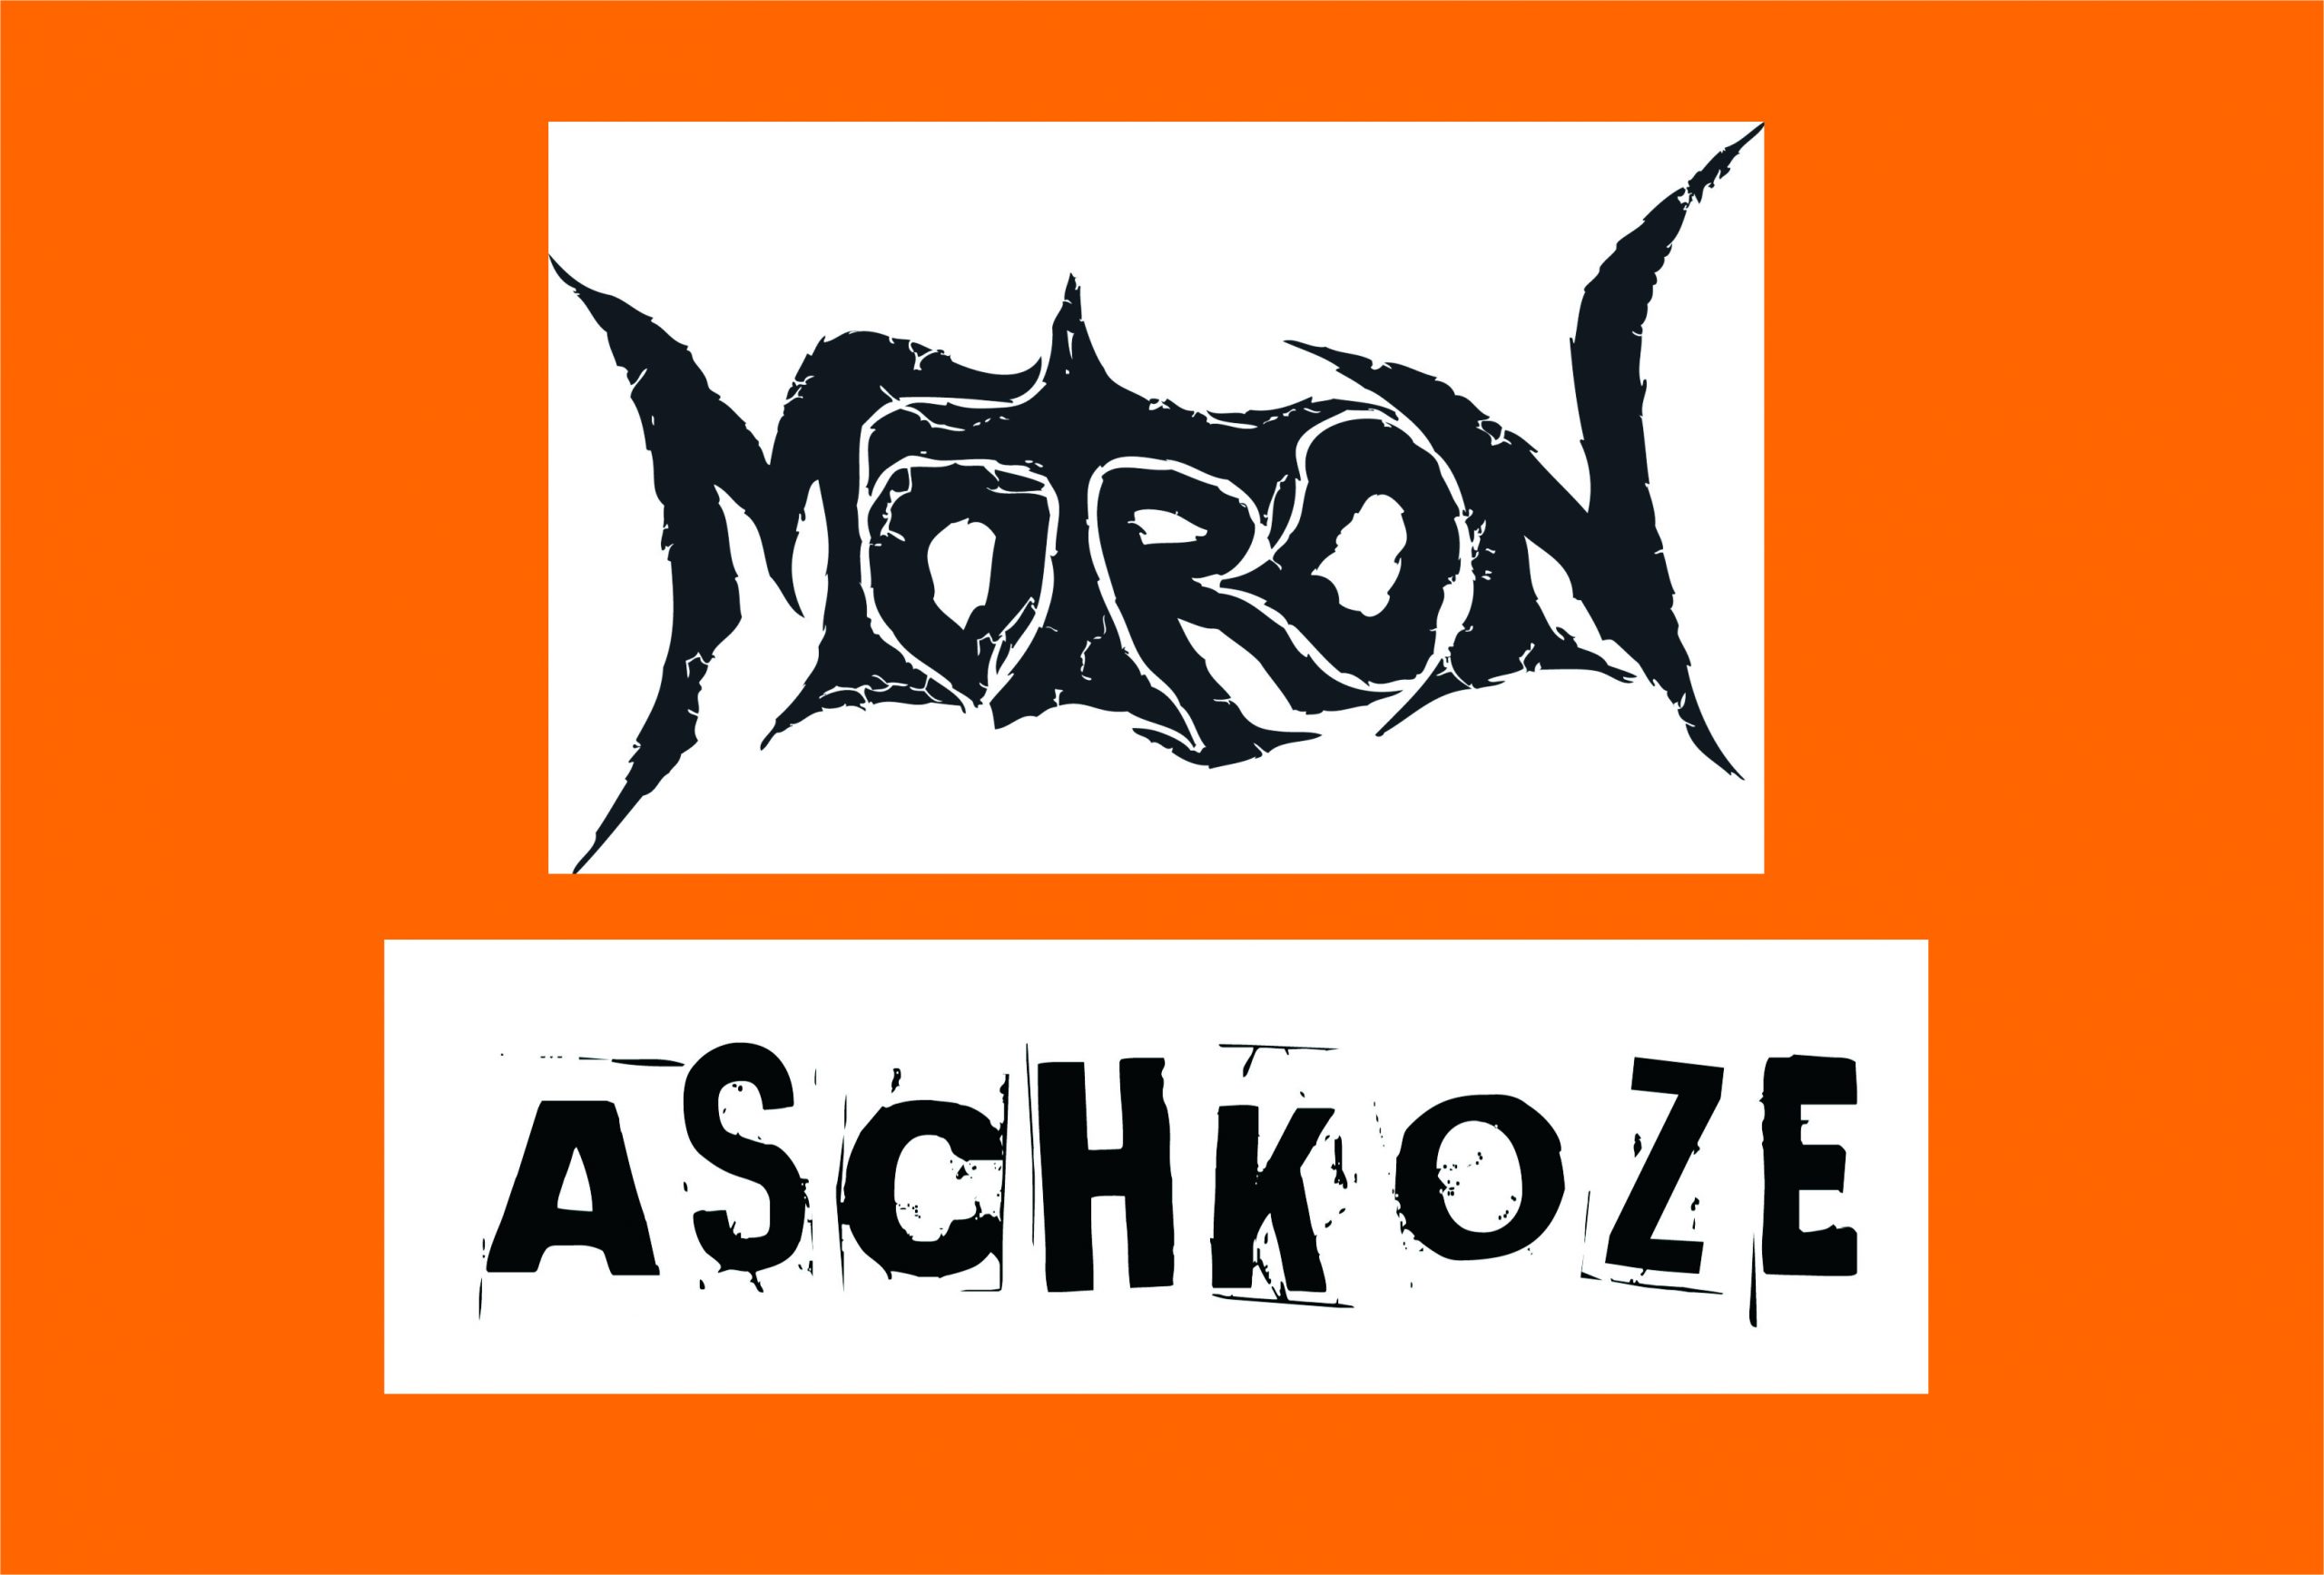 Motron + Aschkoze